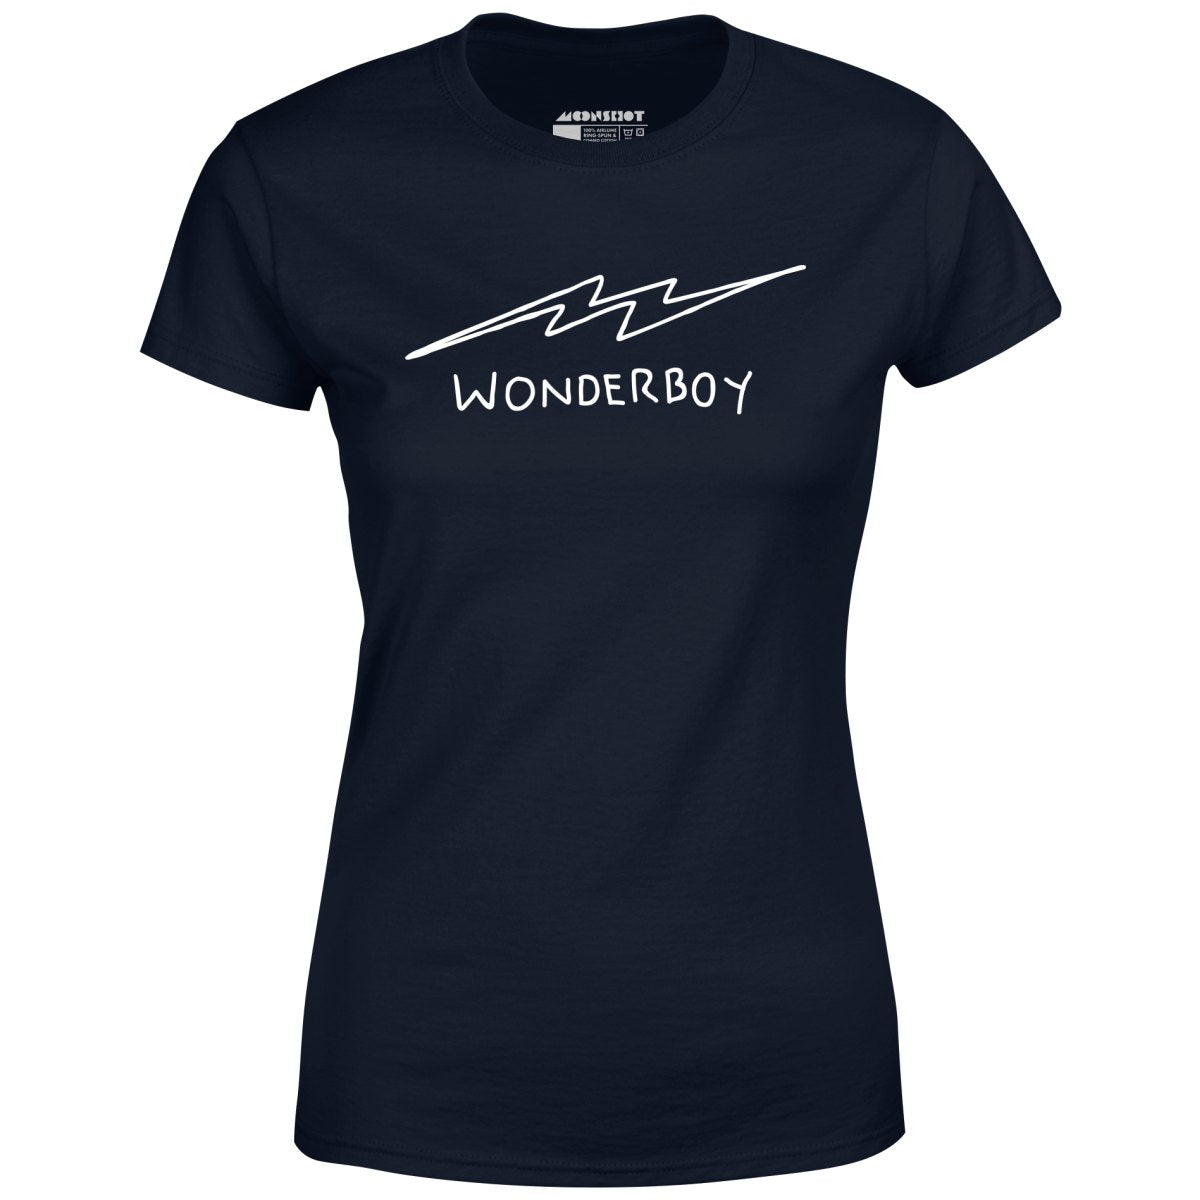 Roy Hobbs Wonderboy Bat - Women's T-Shirt